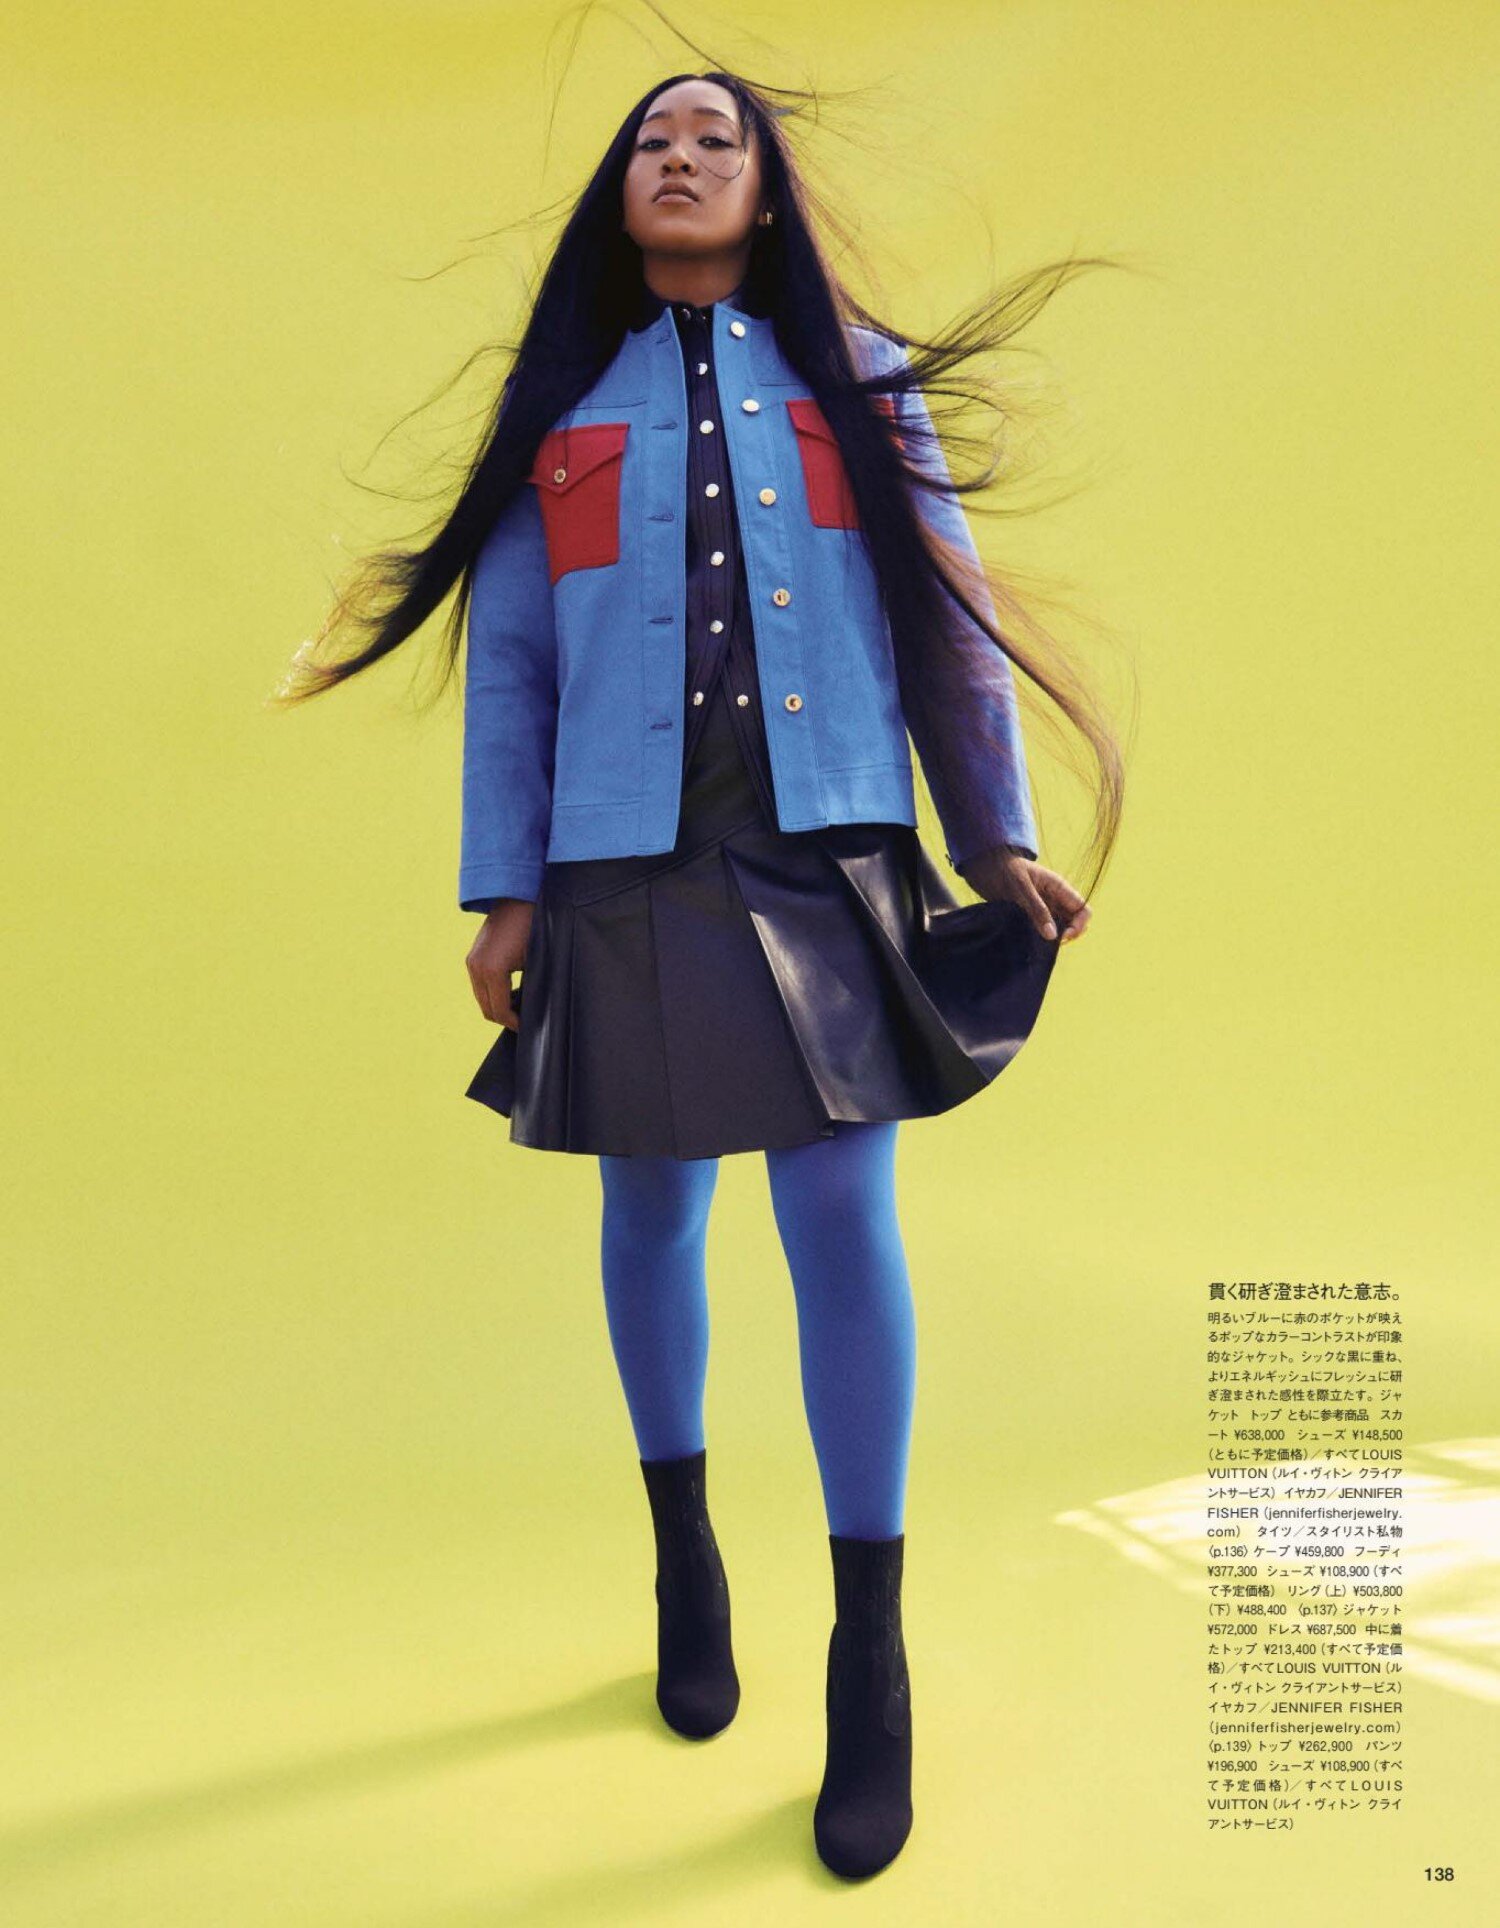 Naomi Osaka Covers Vogue Japan, Saying She Will Play Olympics